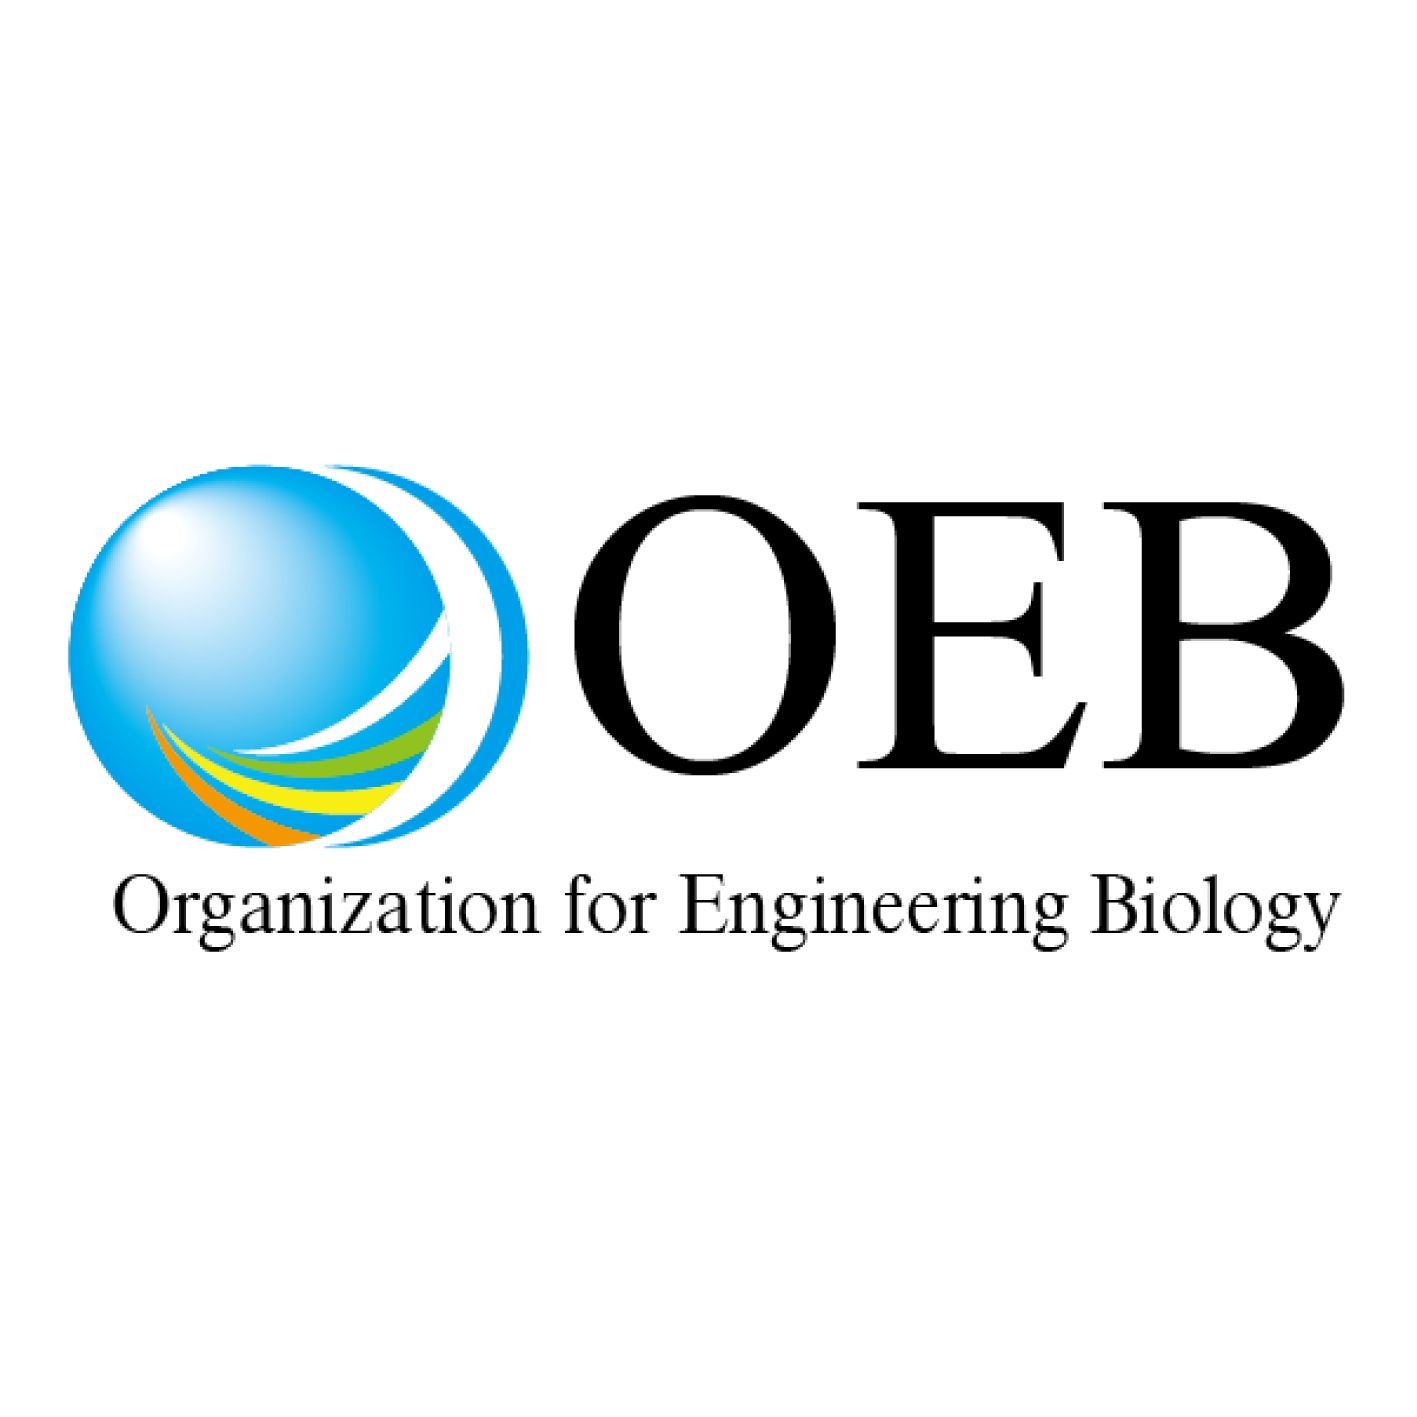 Organization for Engineering Biology